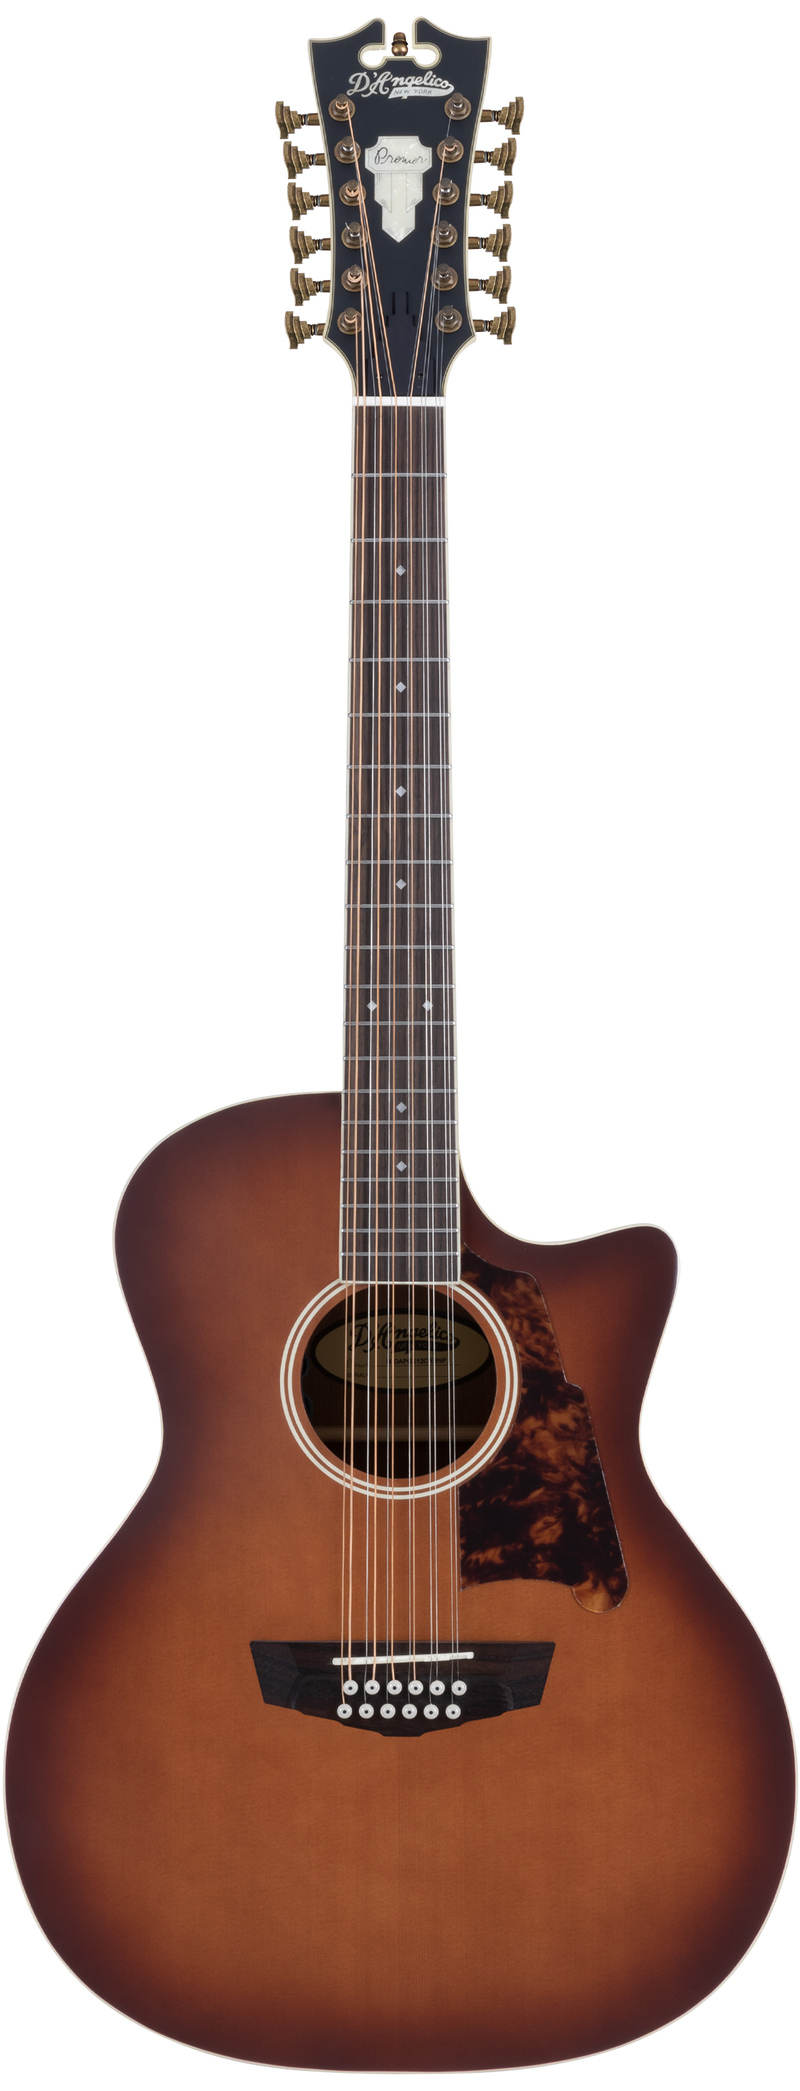 D'Angelico FULTON GRAND AUDITORIUM 12-String Acoustic guitar (Natural Burst)